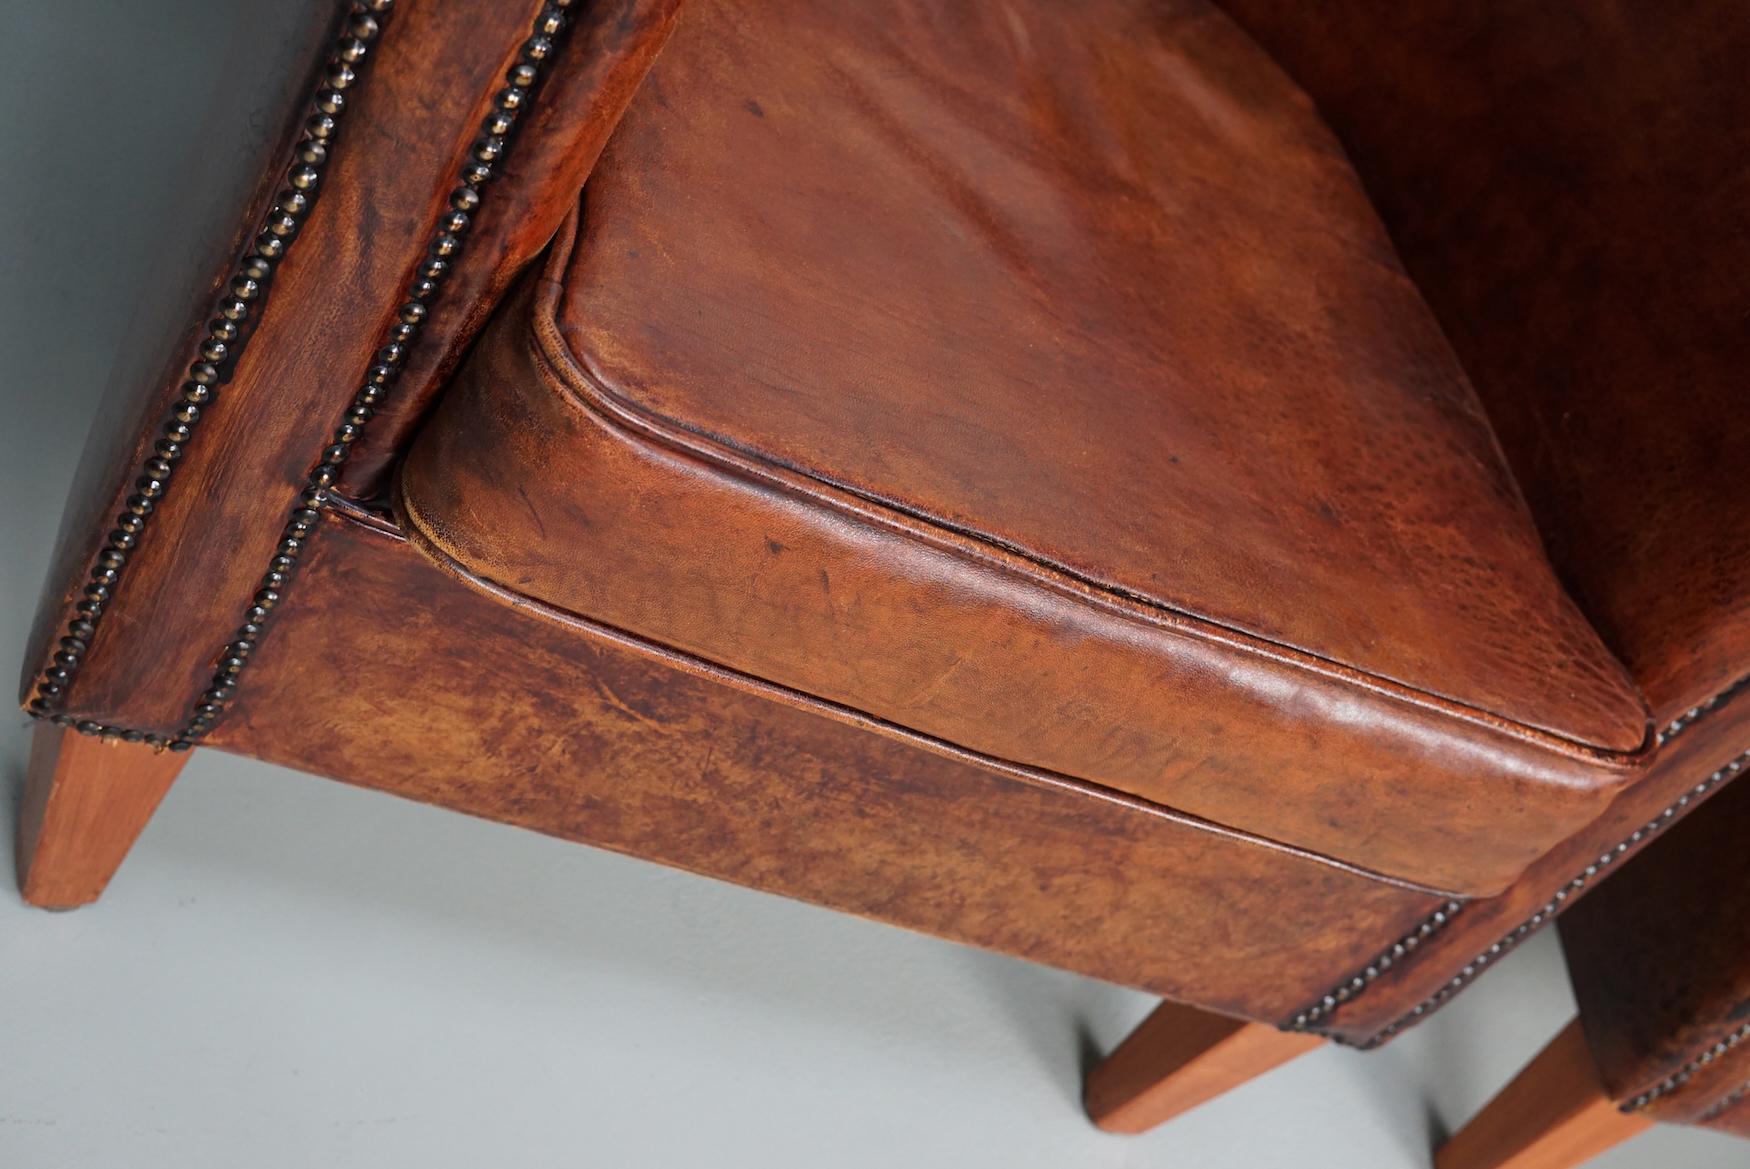 Vintage Dutch Cognac Colored Leather Club Chair, Set of 2 3